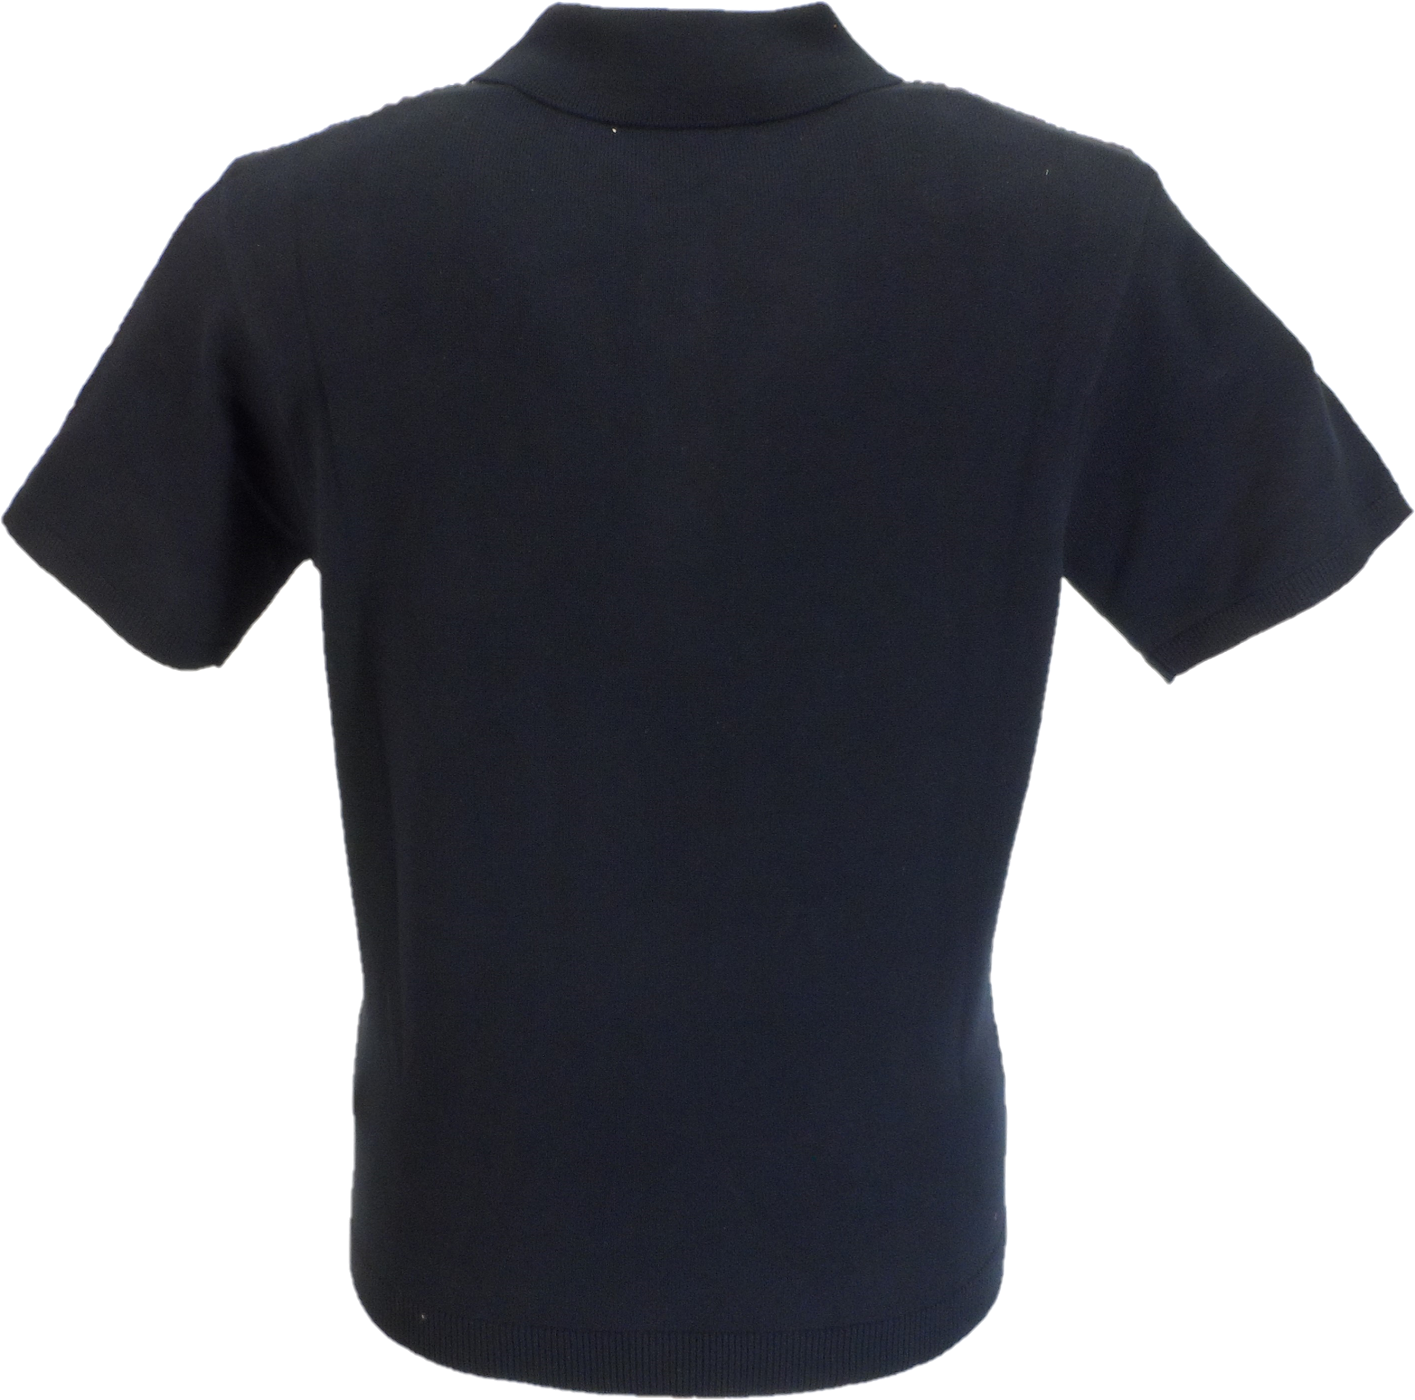 Gabicci Vintage Mens Navy Blue Stripe Knitted Polo Shirt